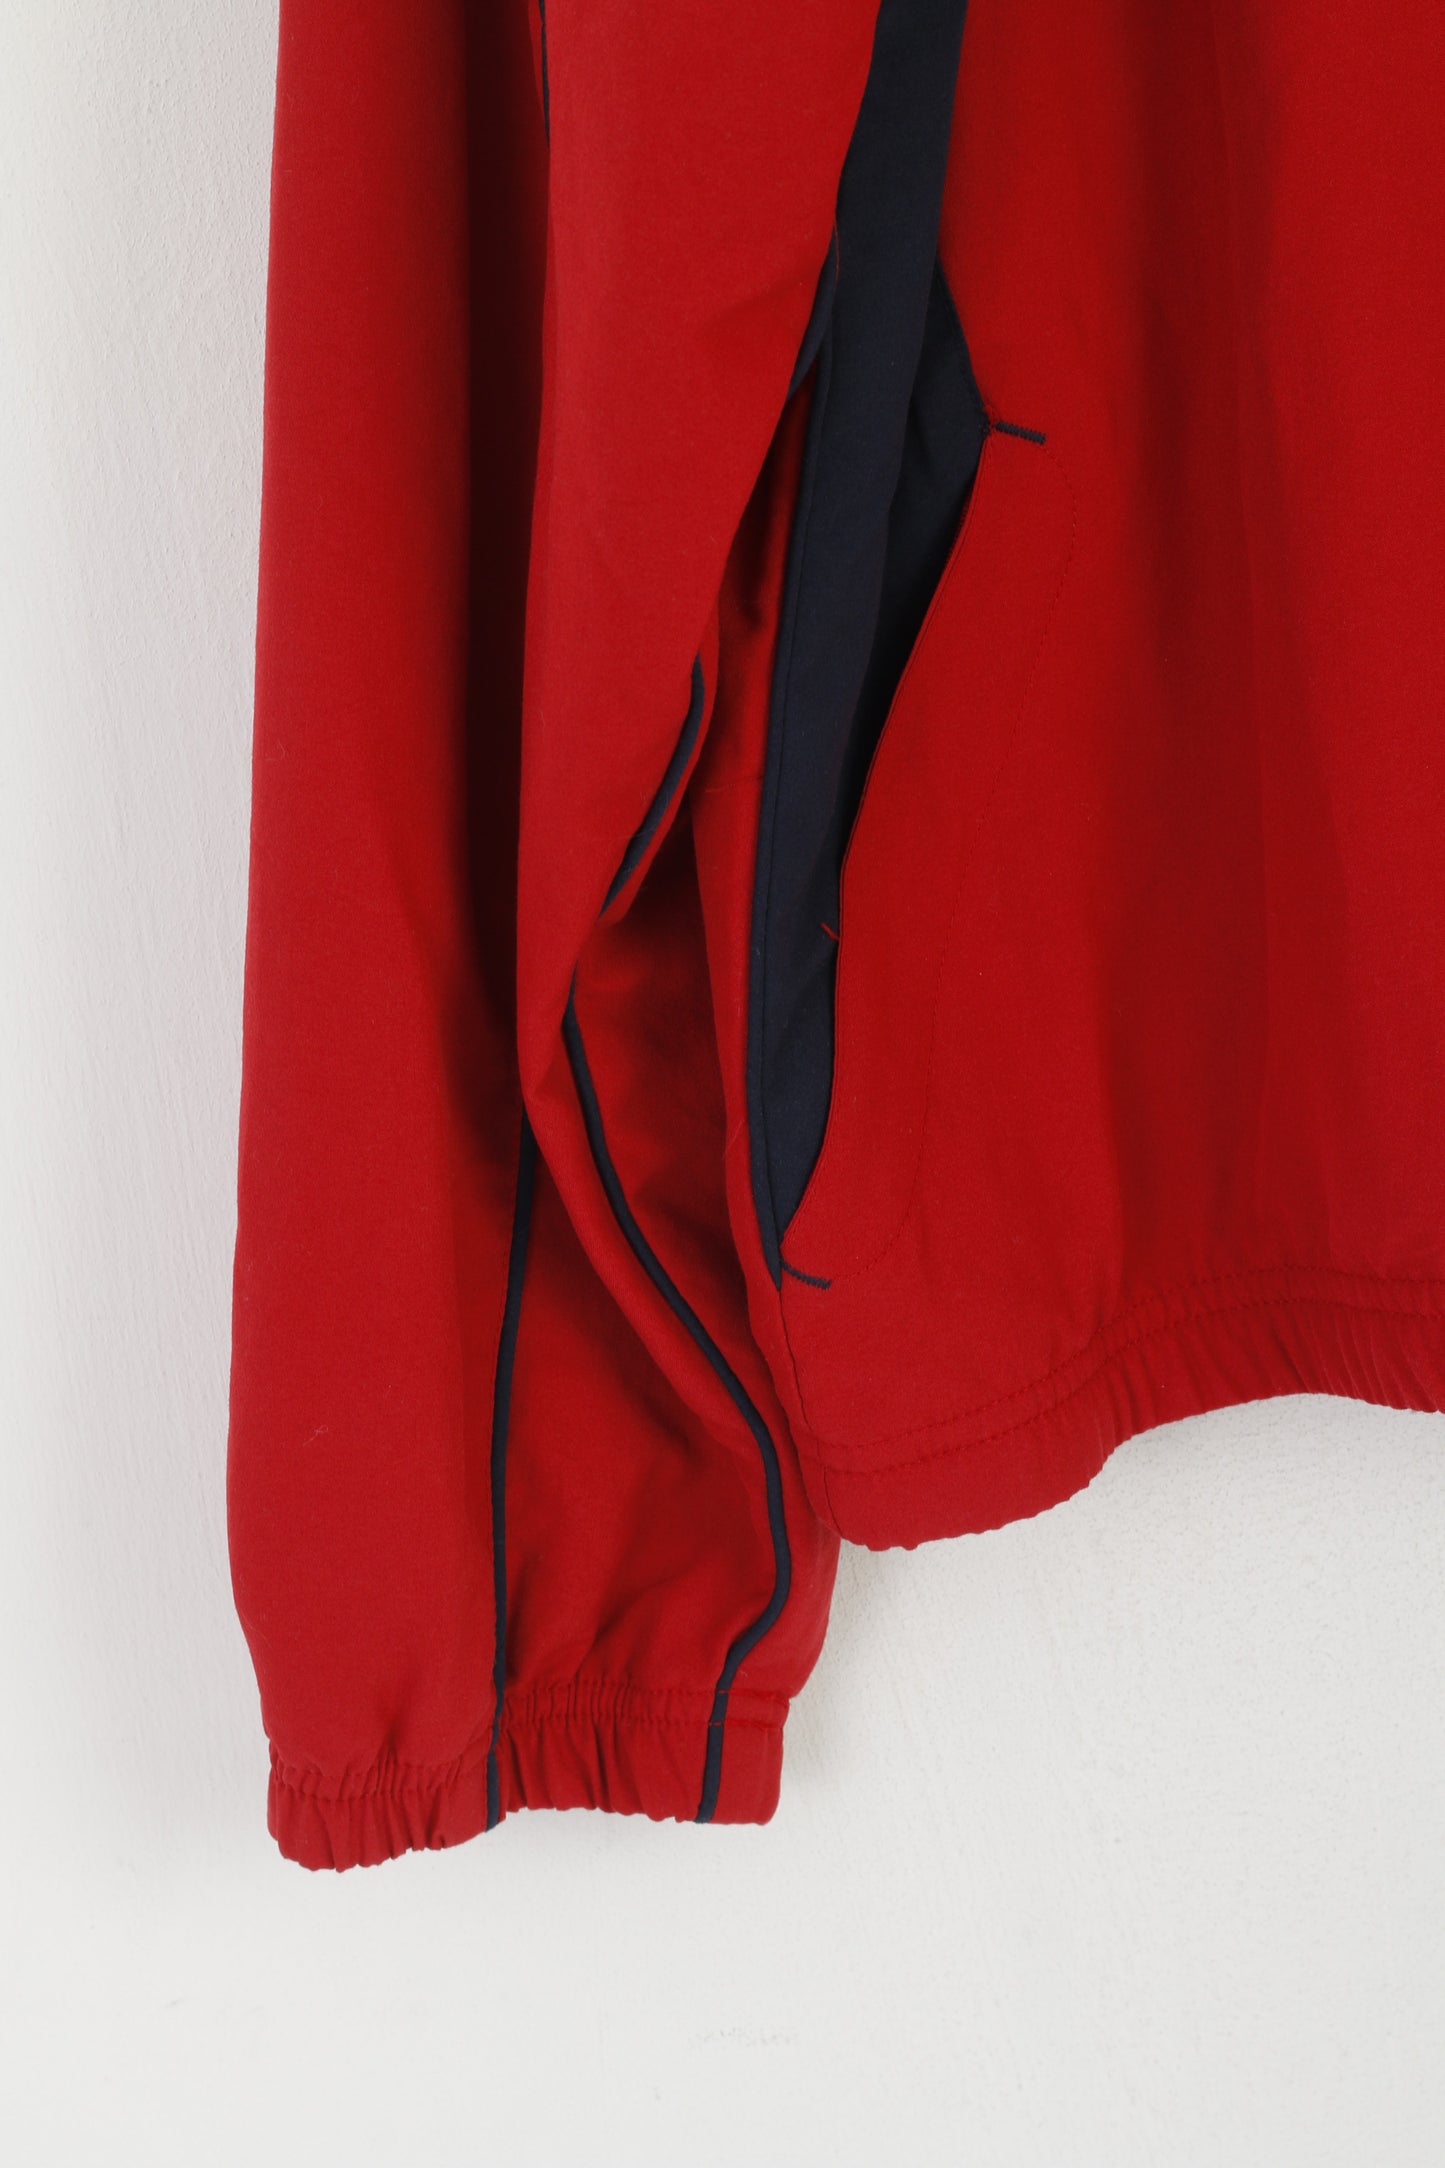 Reebok Femme XL 16 Veste Rouge Vintage Sportswear Zip Up Track Top